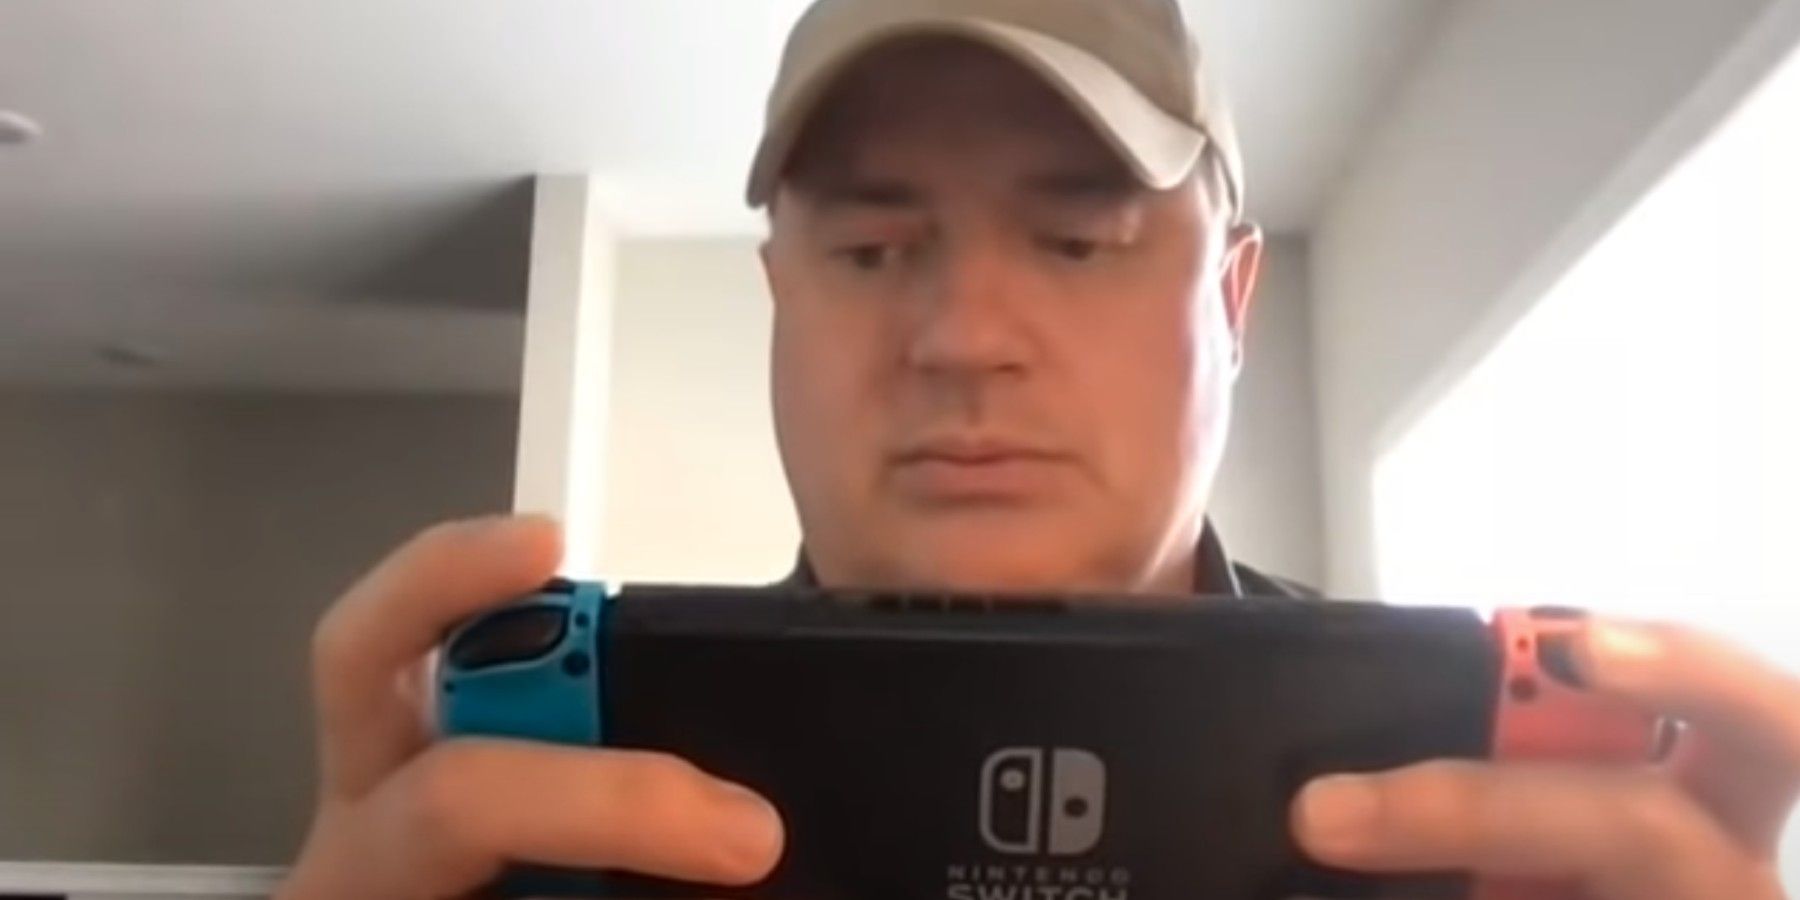 brendan fraser playing his Nintendo Switch